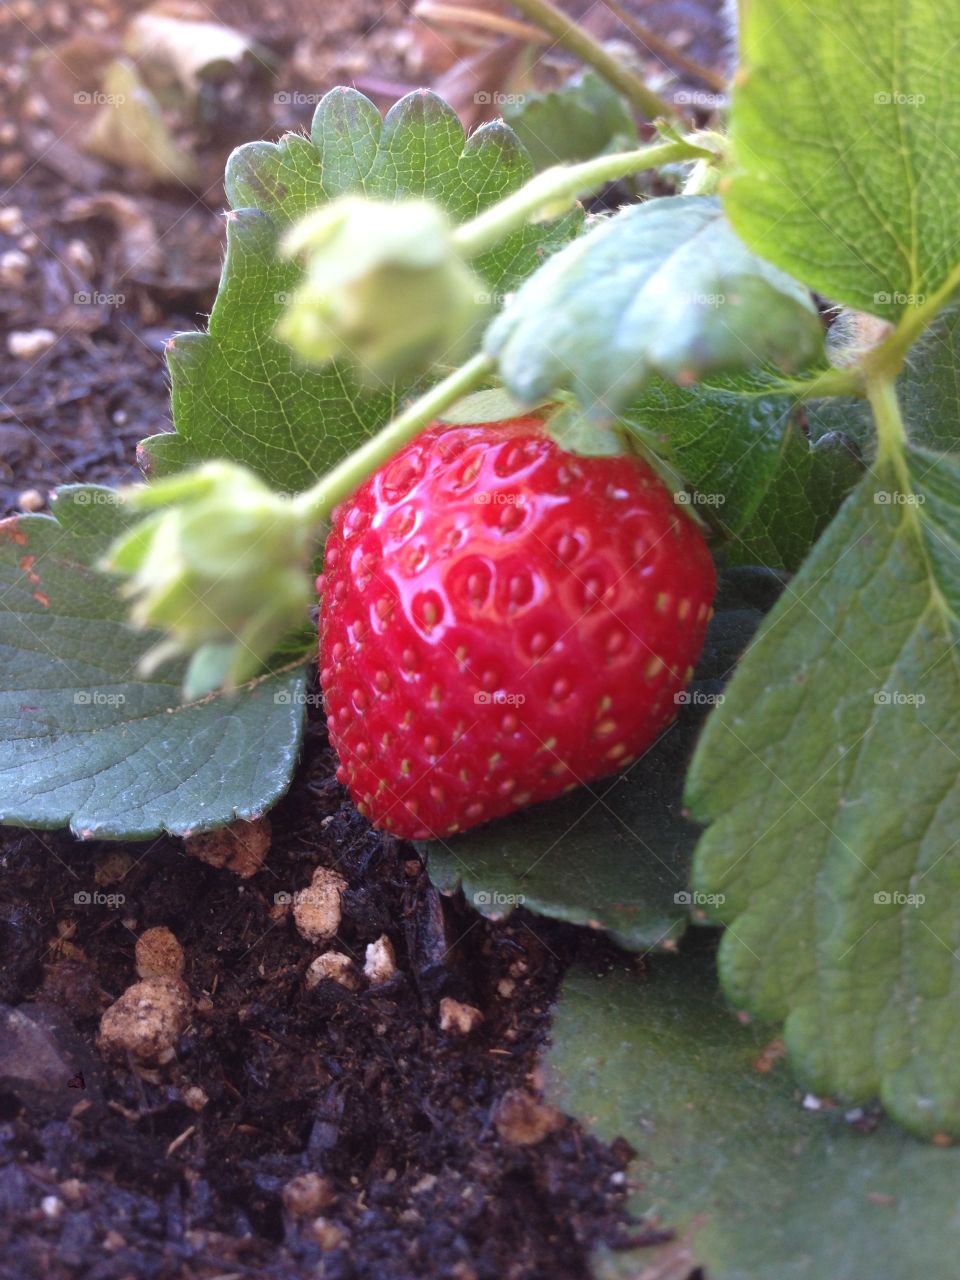 A fresh ripe strawberry